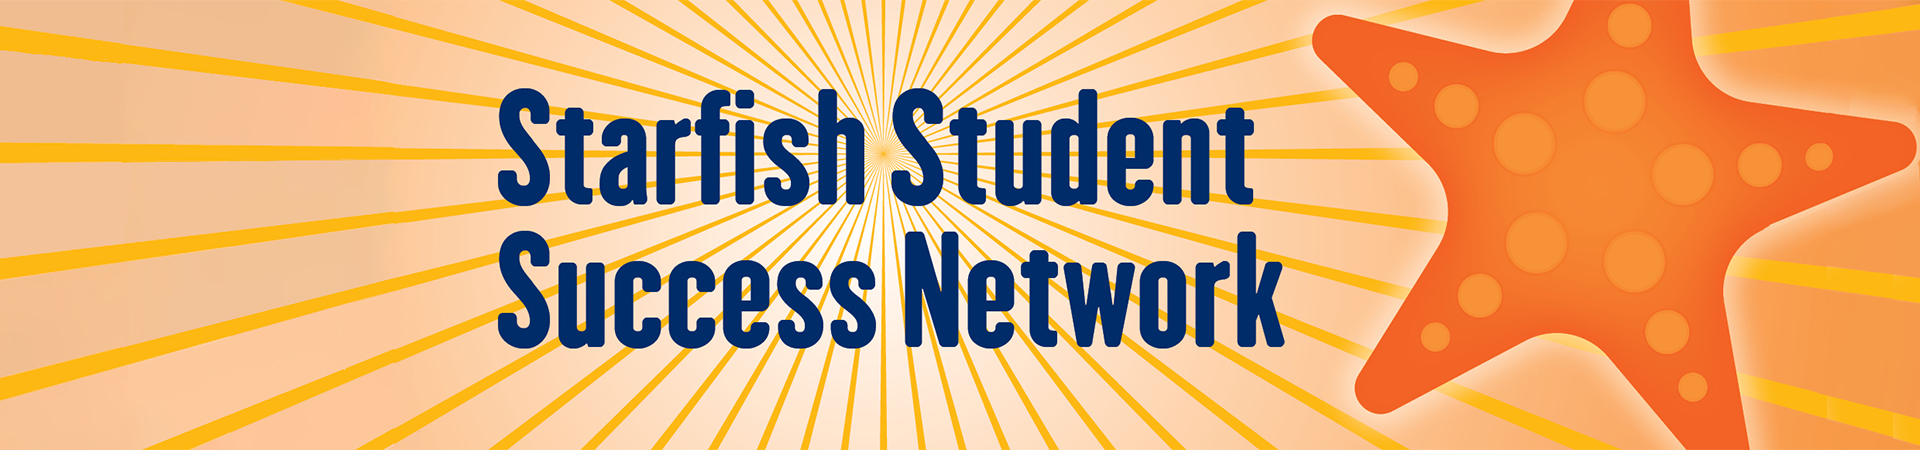 Starfish Student Success Network